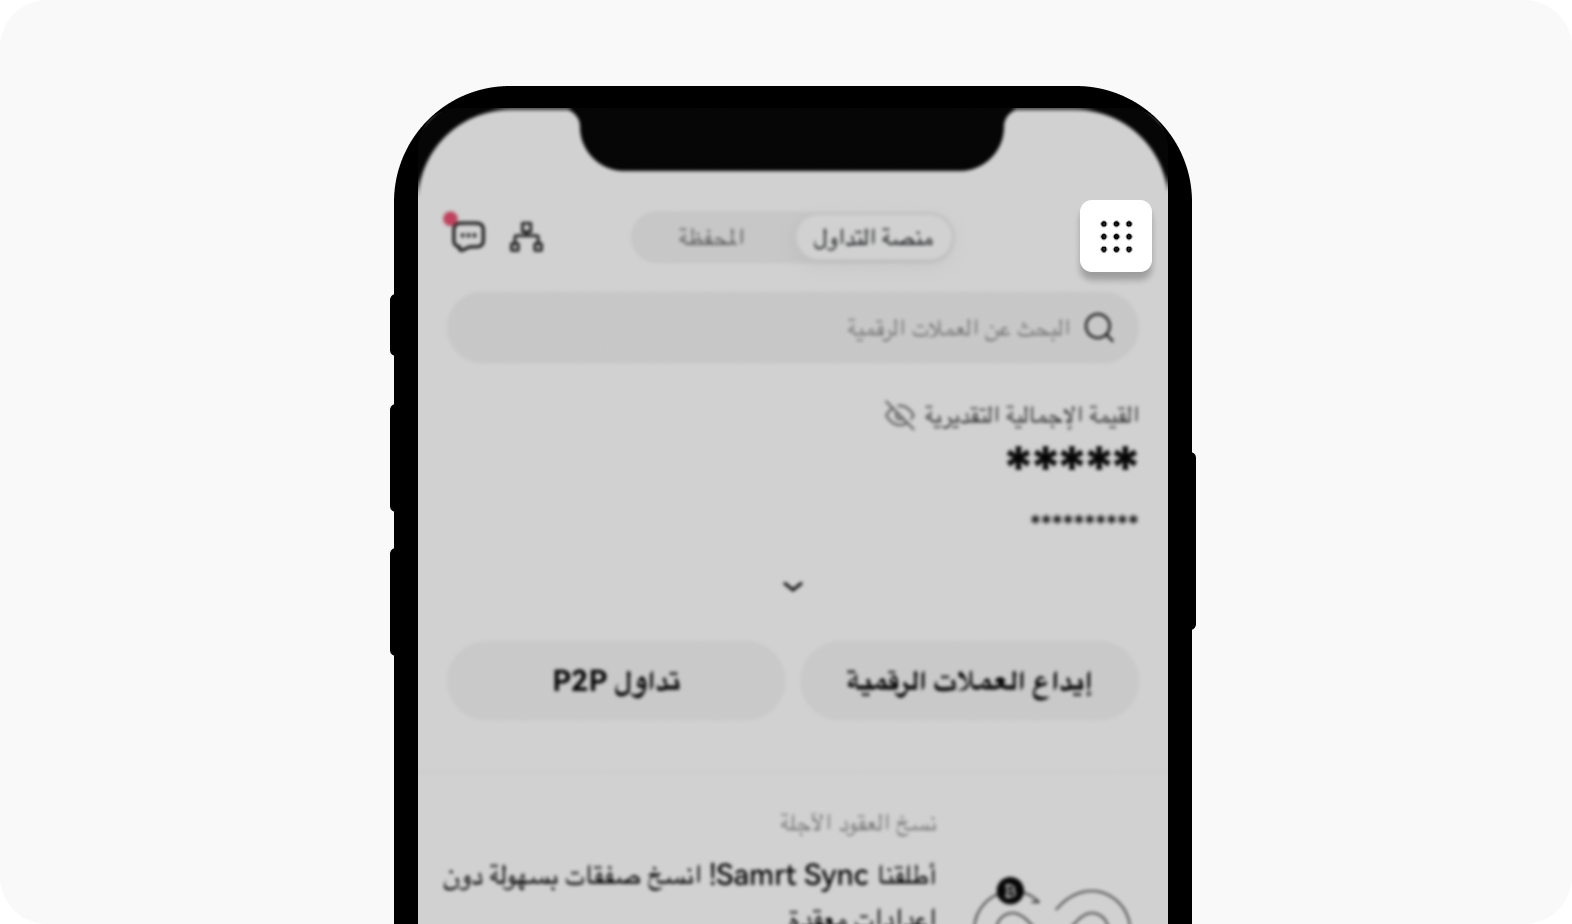 CT-accountsecurity-changemobile-app1-arab